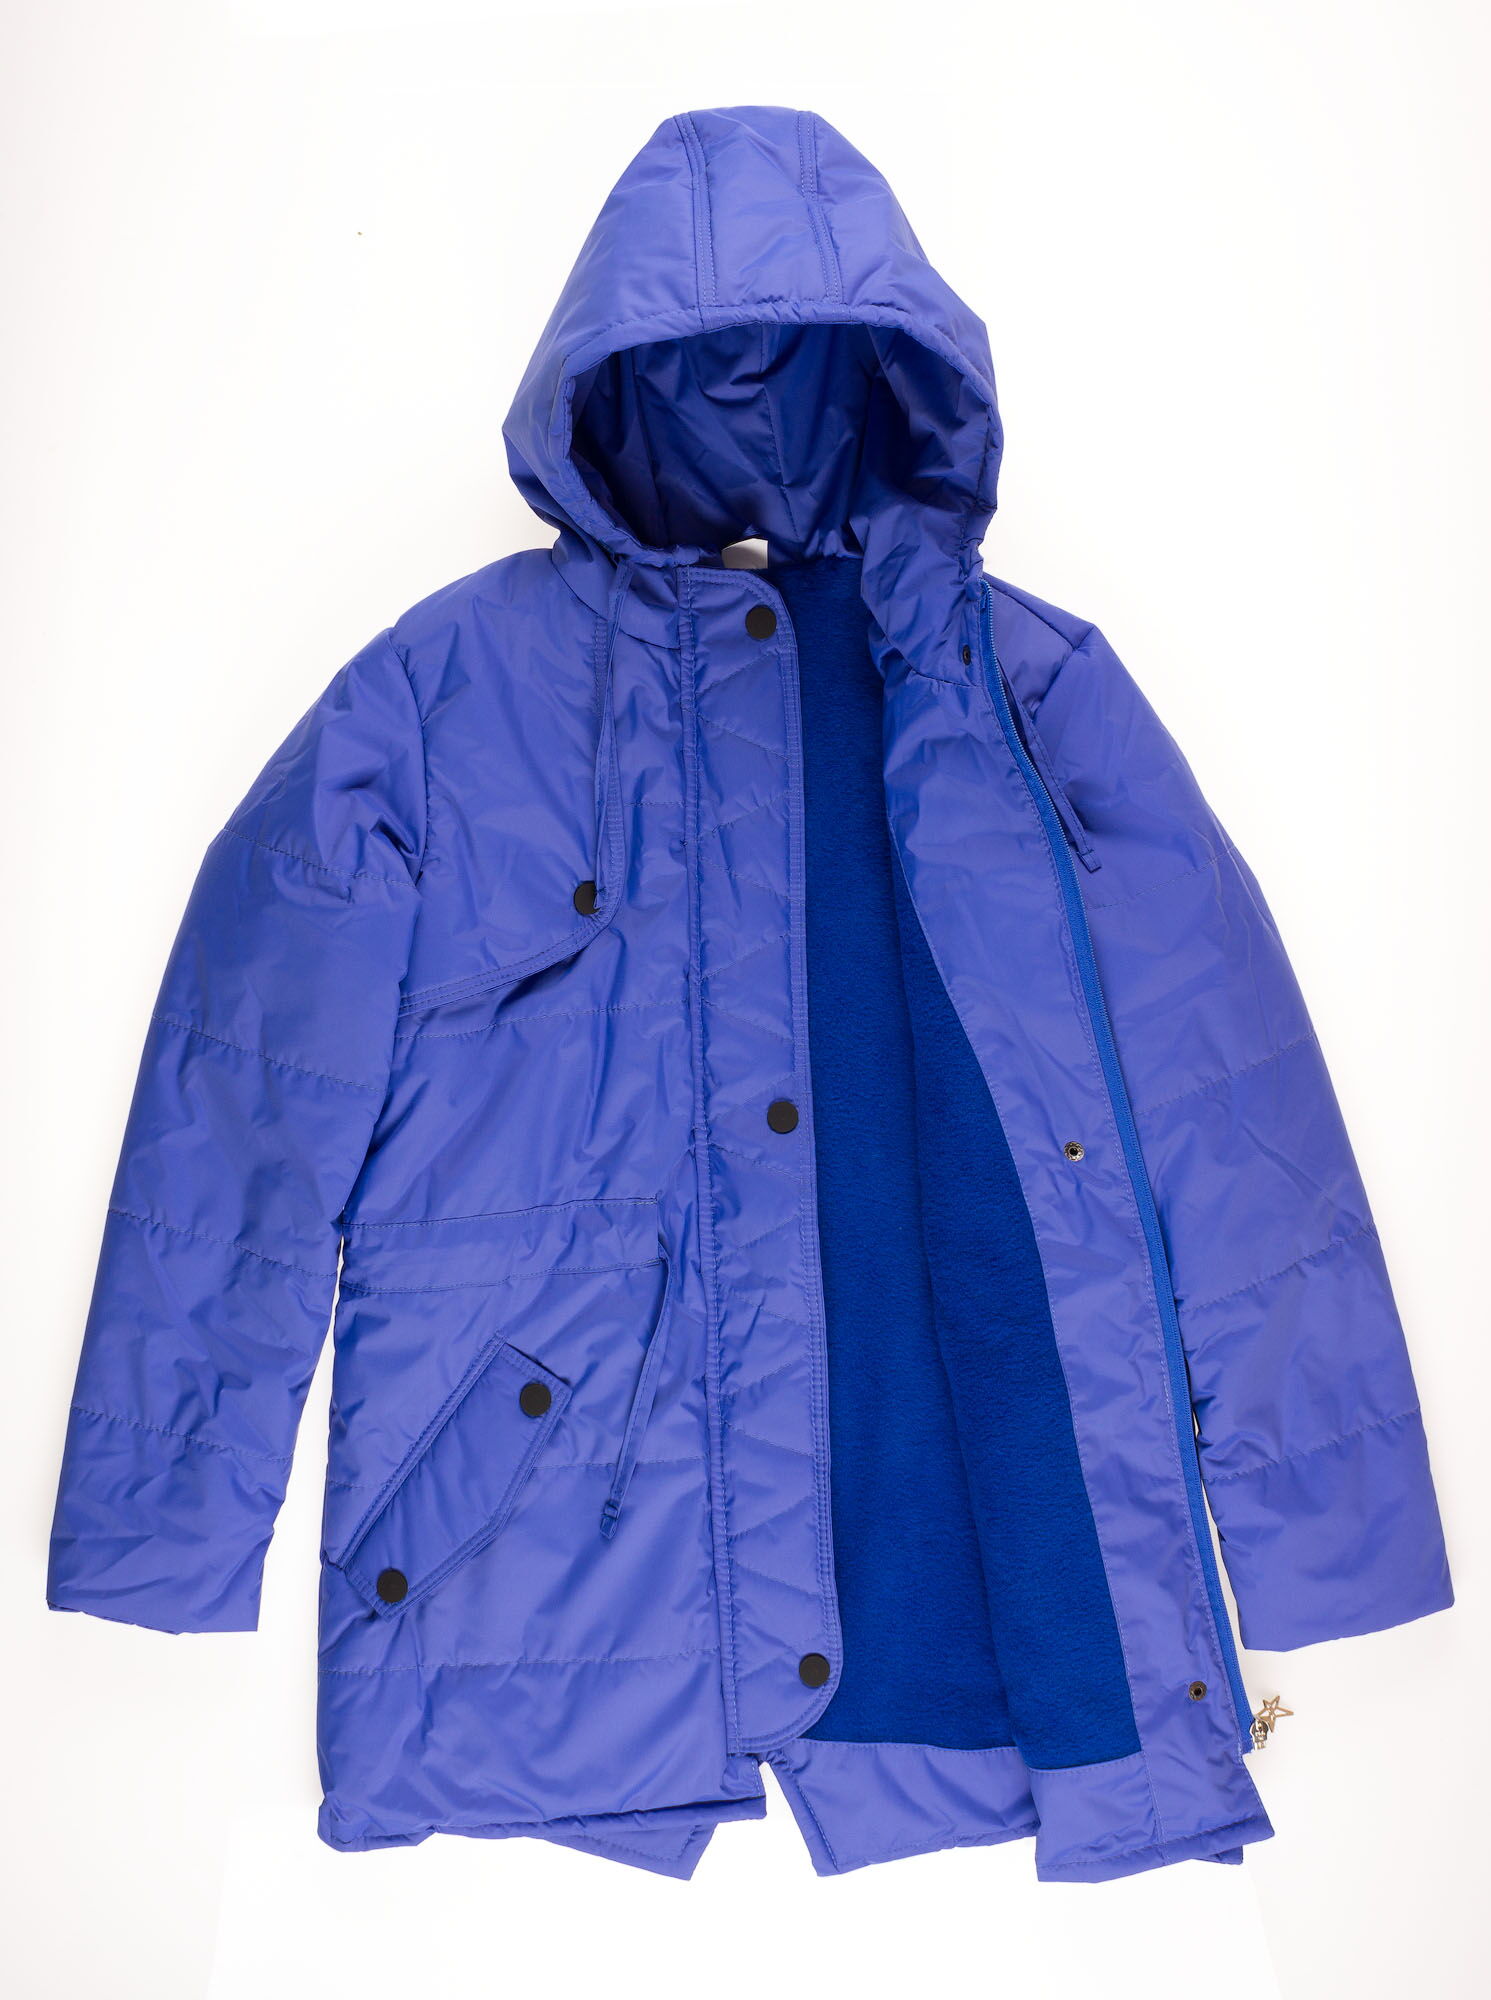 Куртка для девочки ОДЯГАЙКО синяя 22128 - картинка